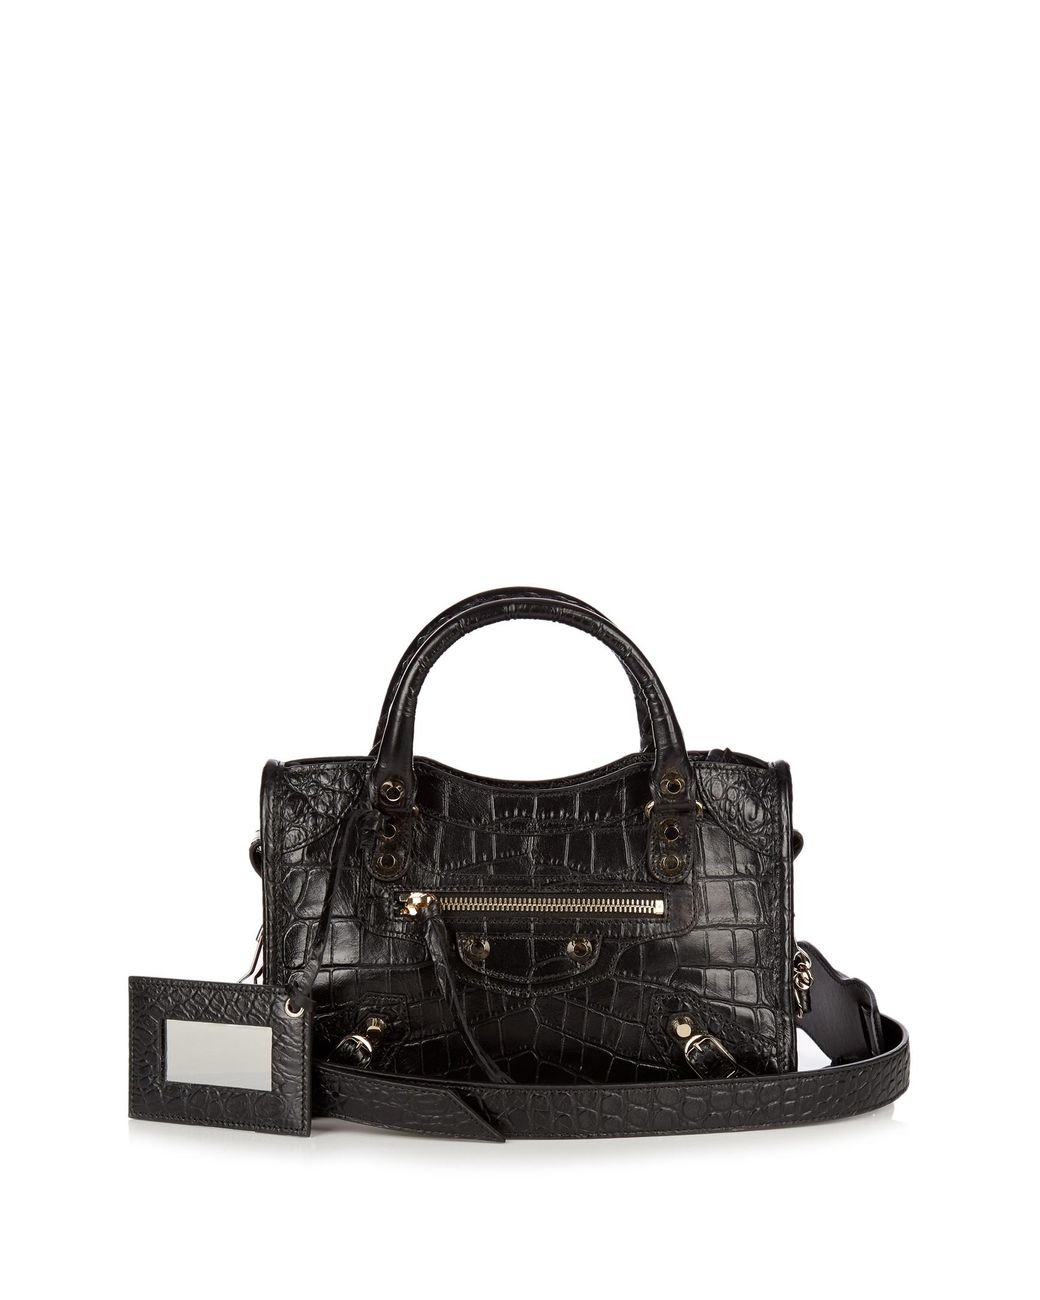 Balenciaga Classic City Mini Crocodile-effect Leather Bag in Black | Lyst